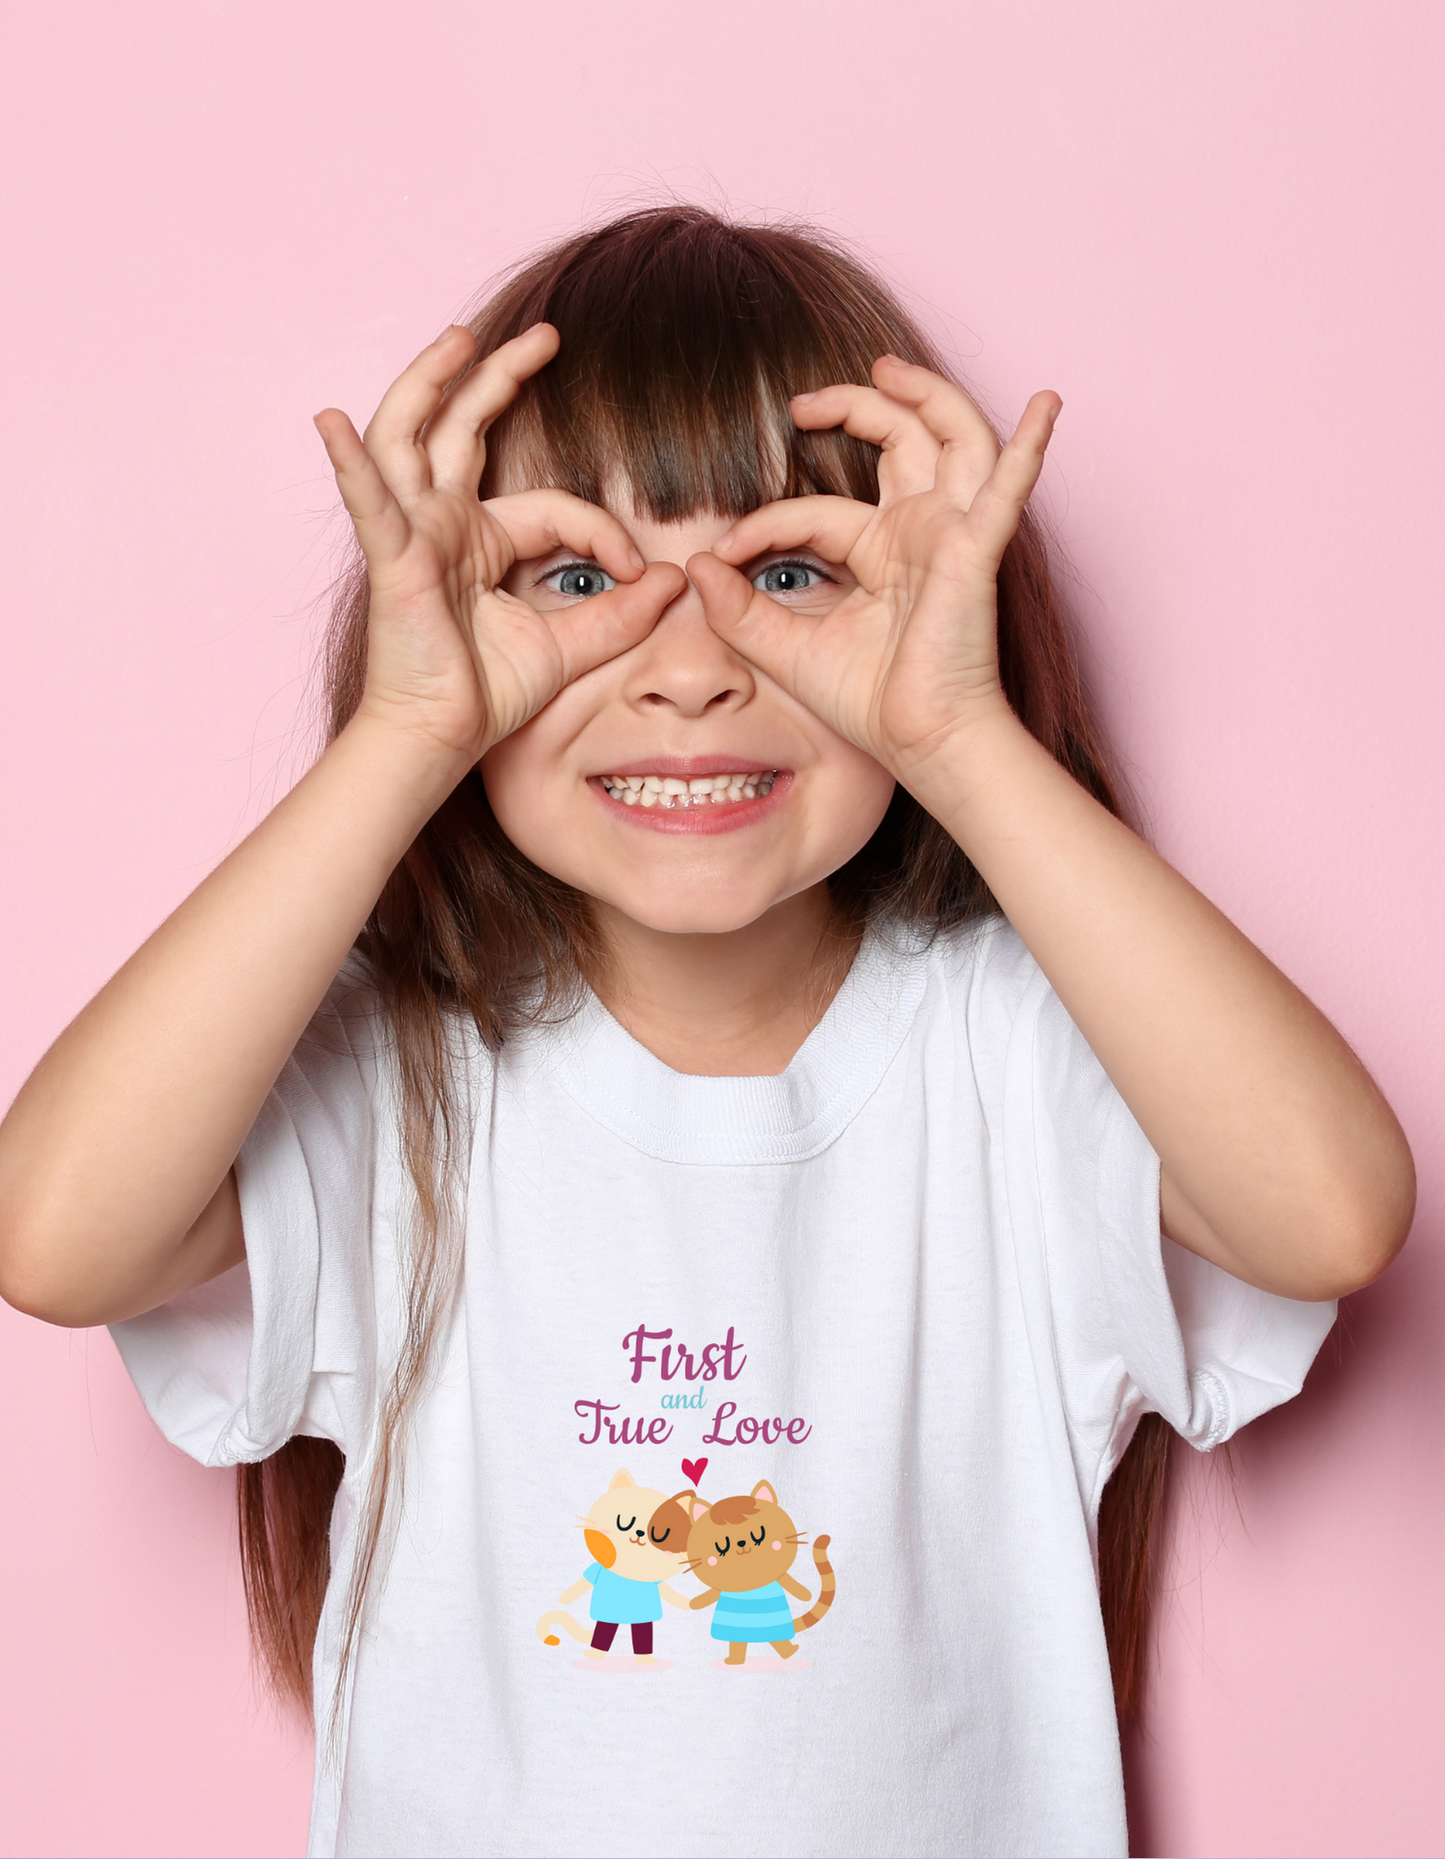 First and True Love Kids T-Shirt